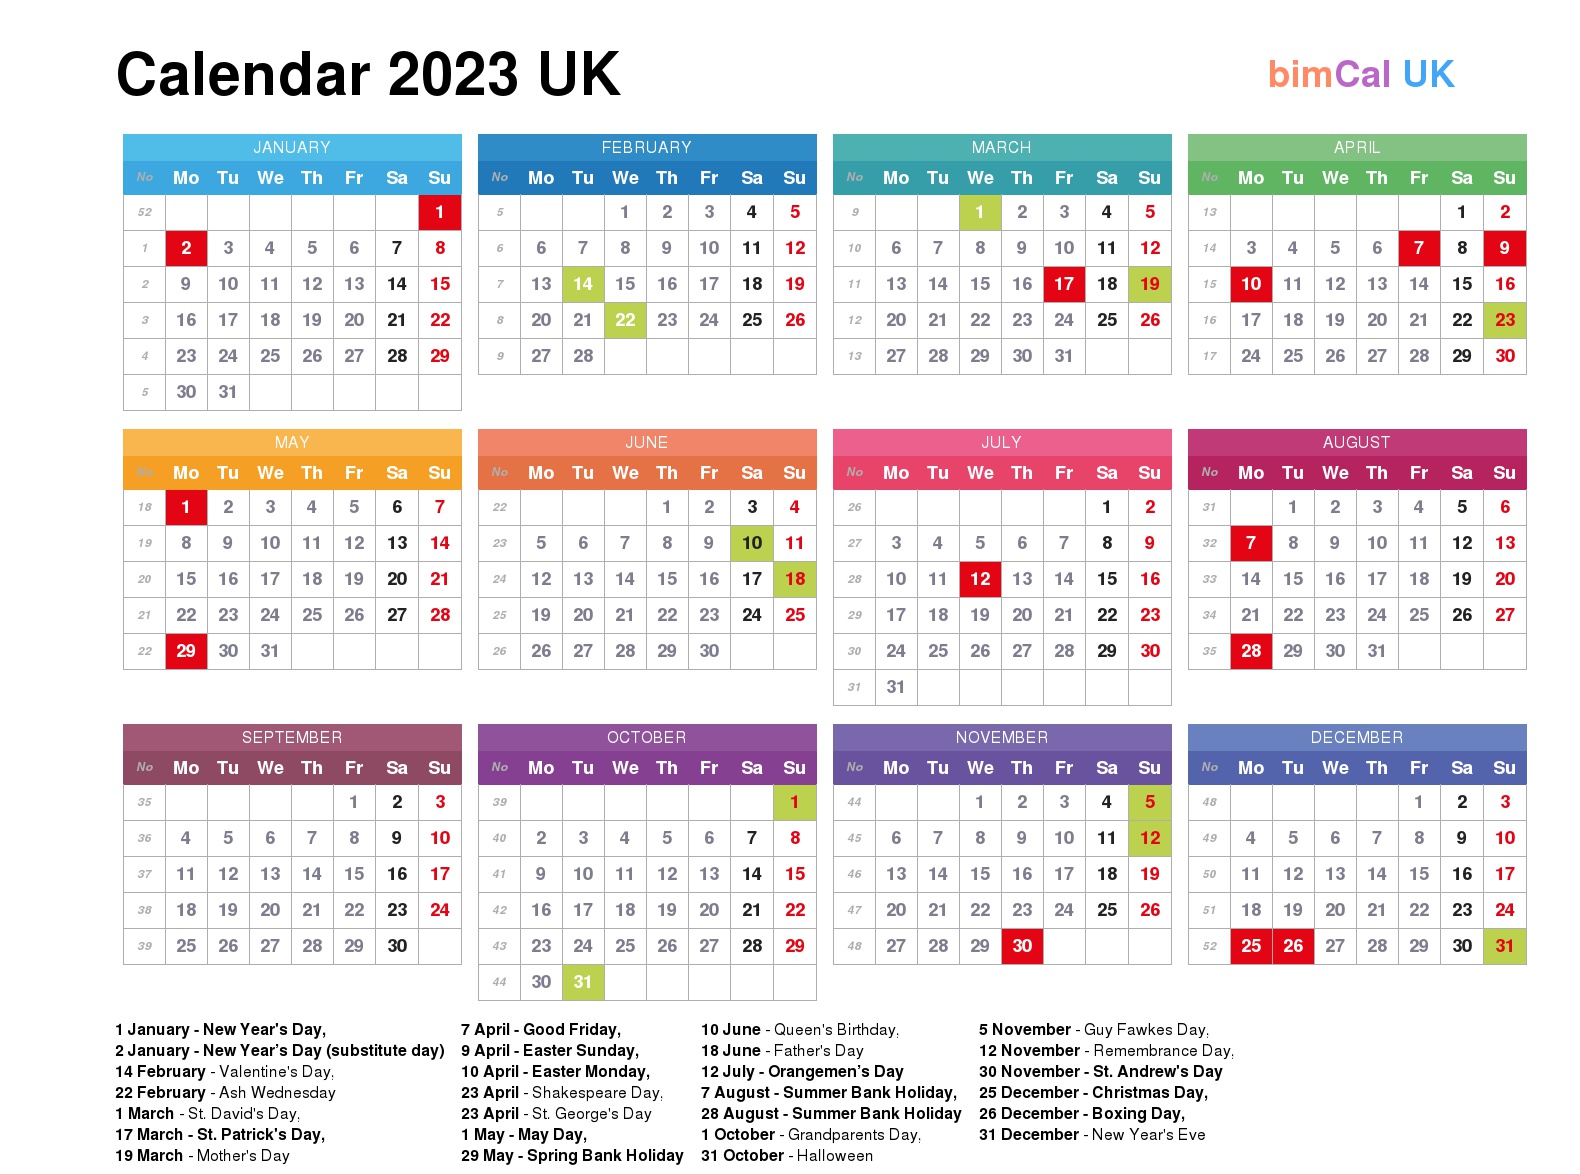 calendar 2023 including bank holidays uk get calendar 2023 update